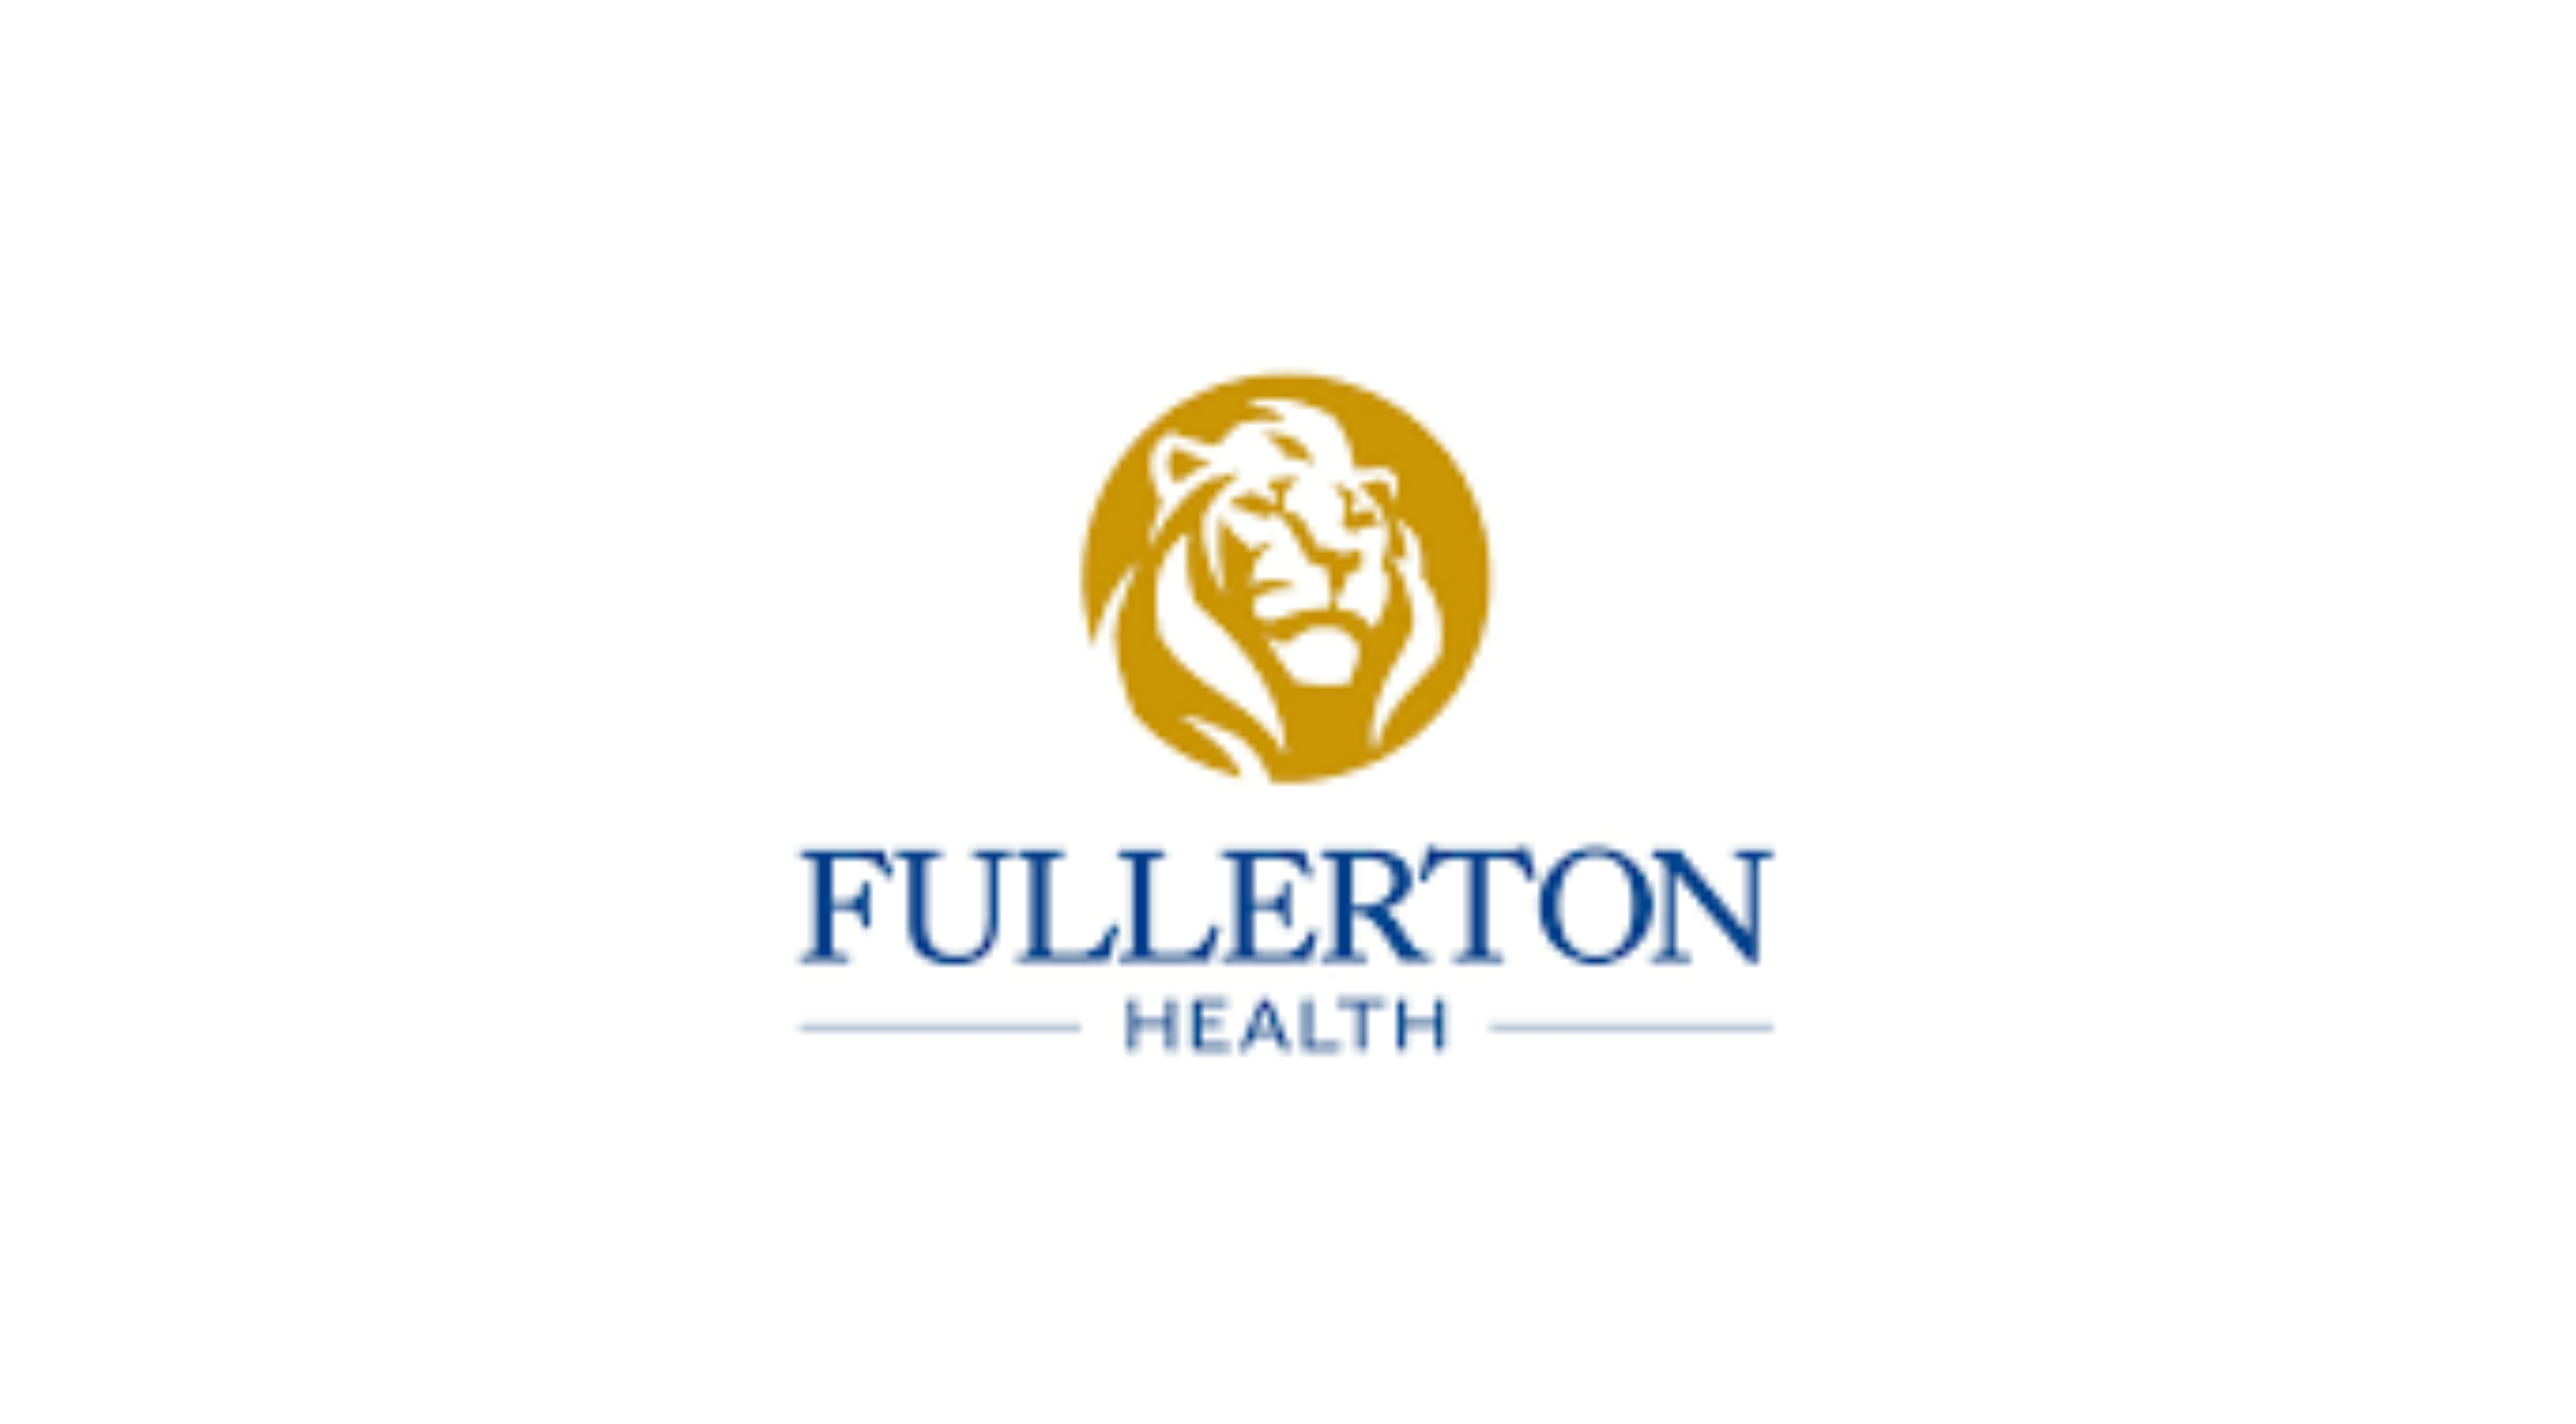 BẢO HIỂM FULLERTON HEALTH